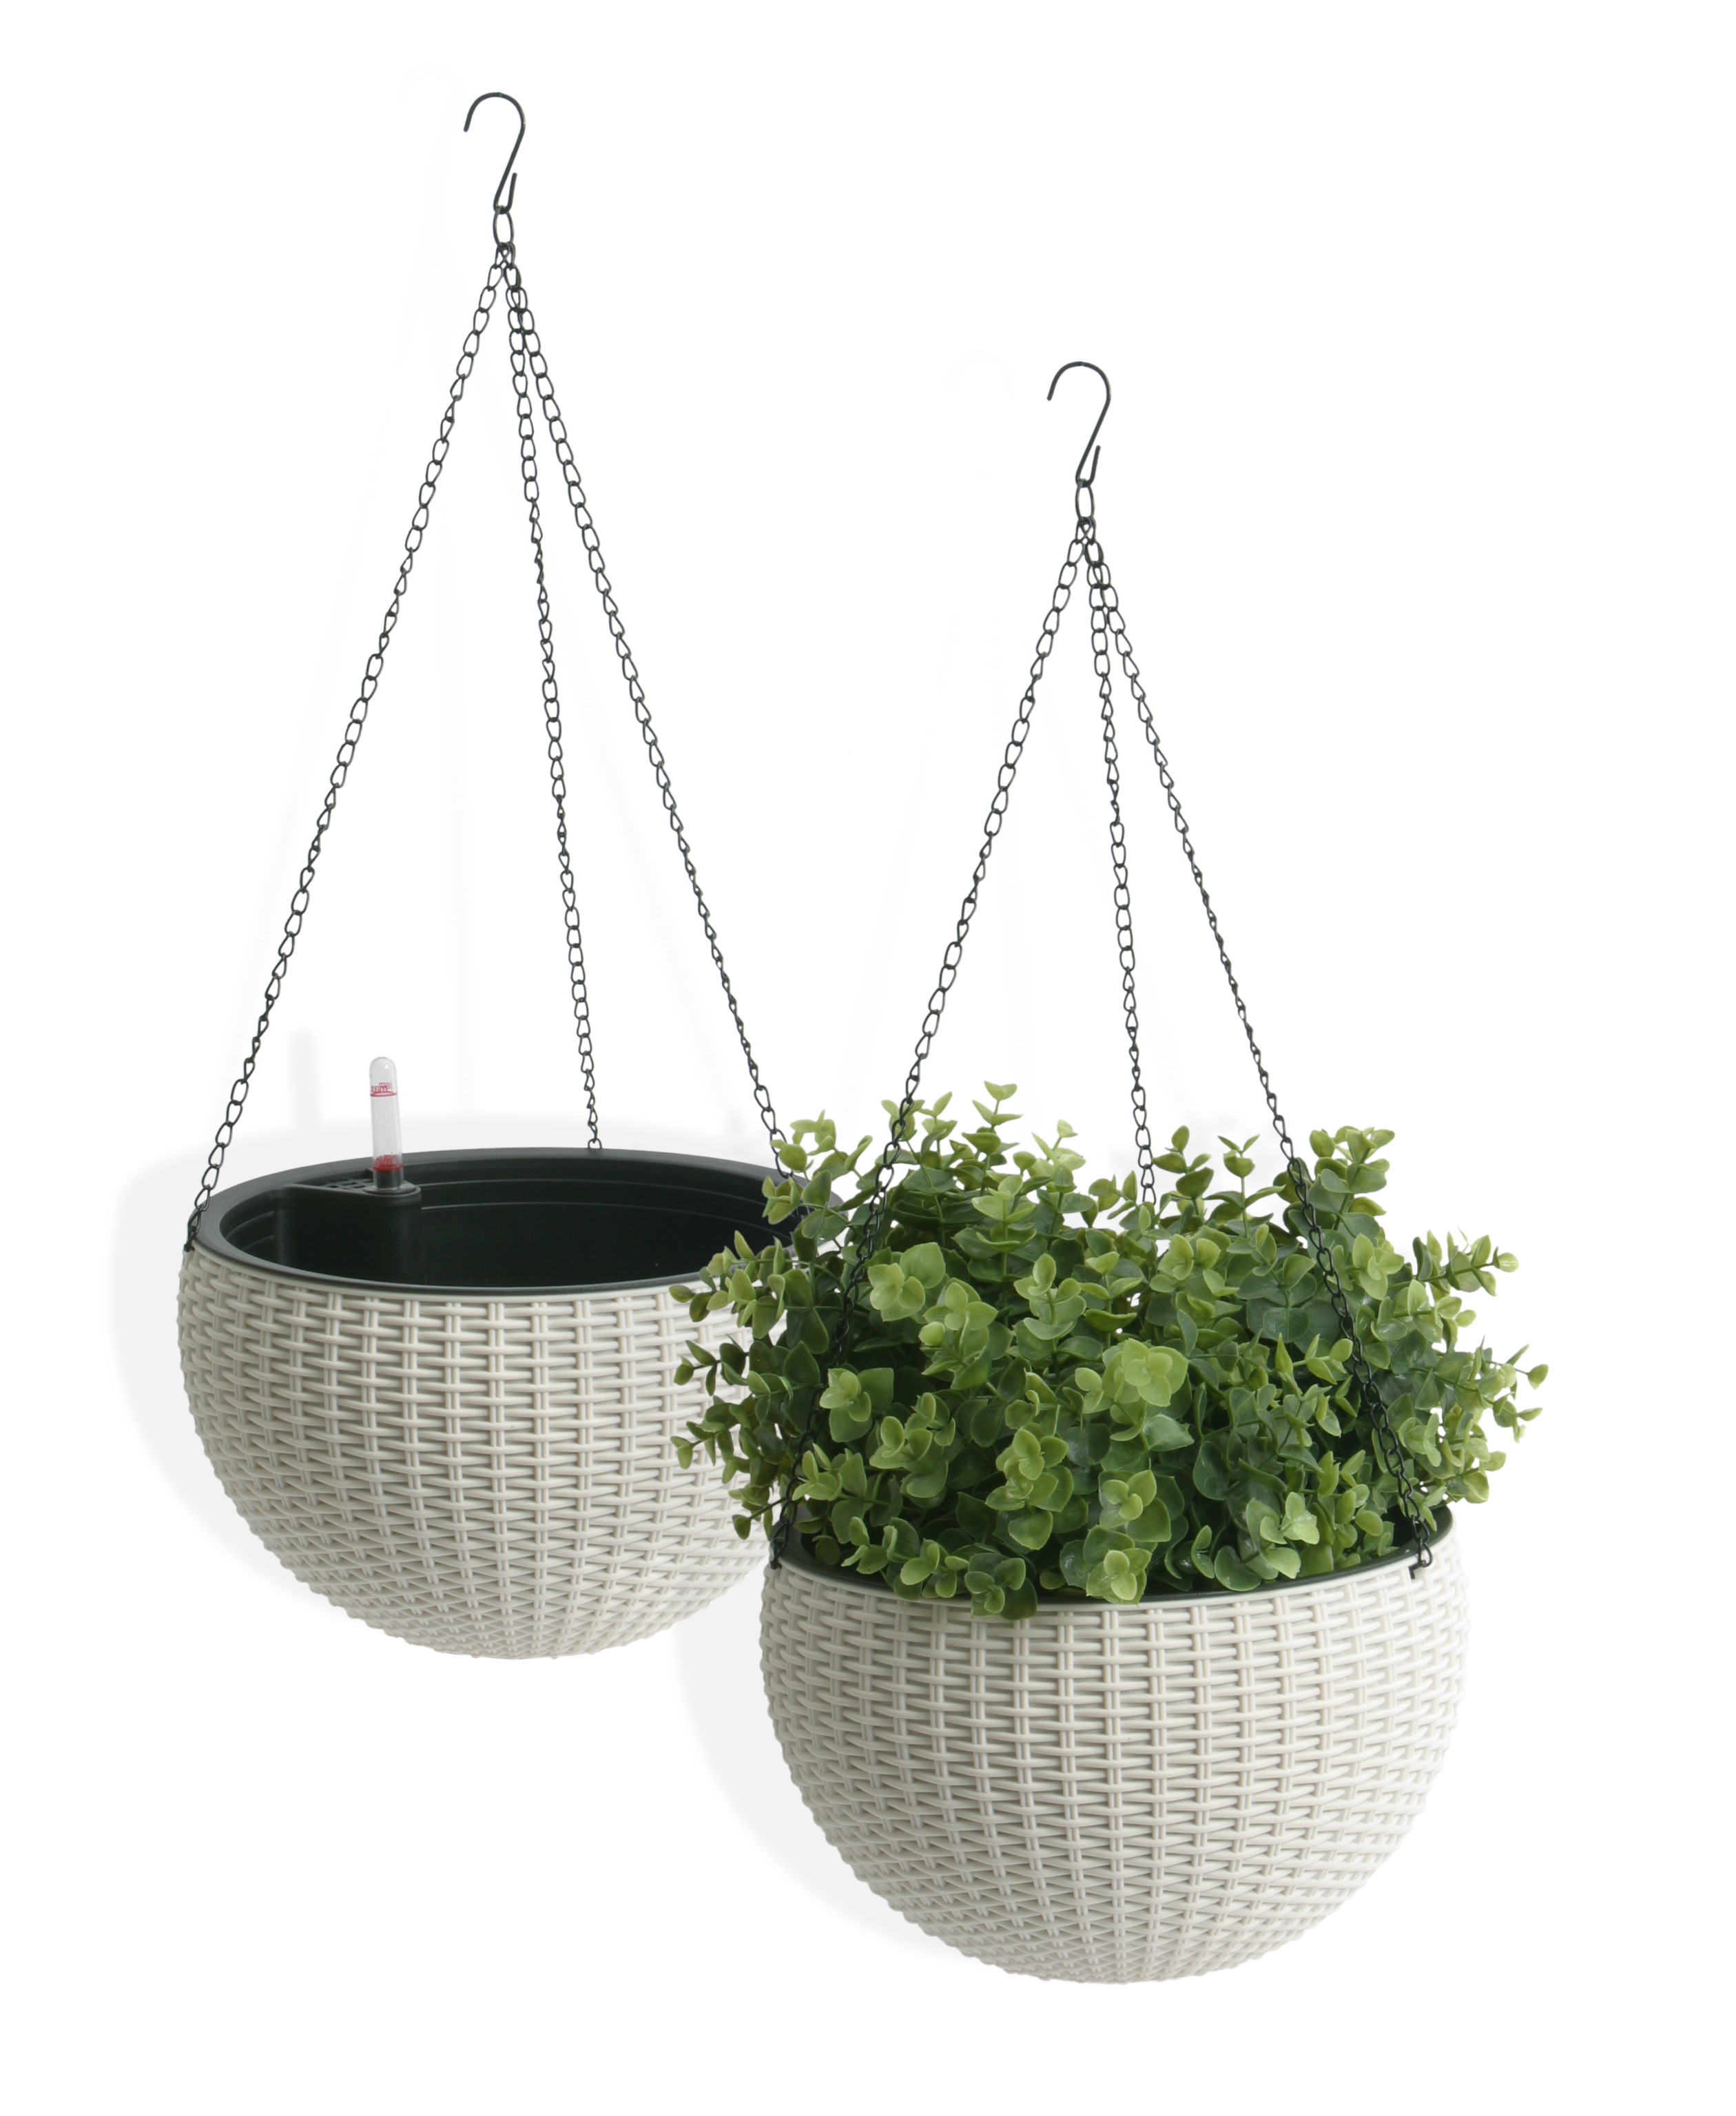 Algreen Wicker 10" Hanging Basket Planter, Self-Watering, Rattan White, 2 PACK - image 1 of 2